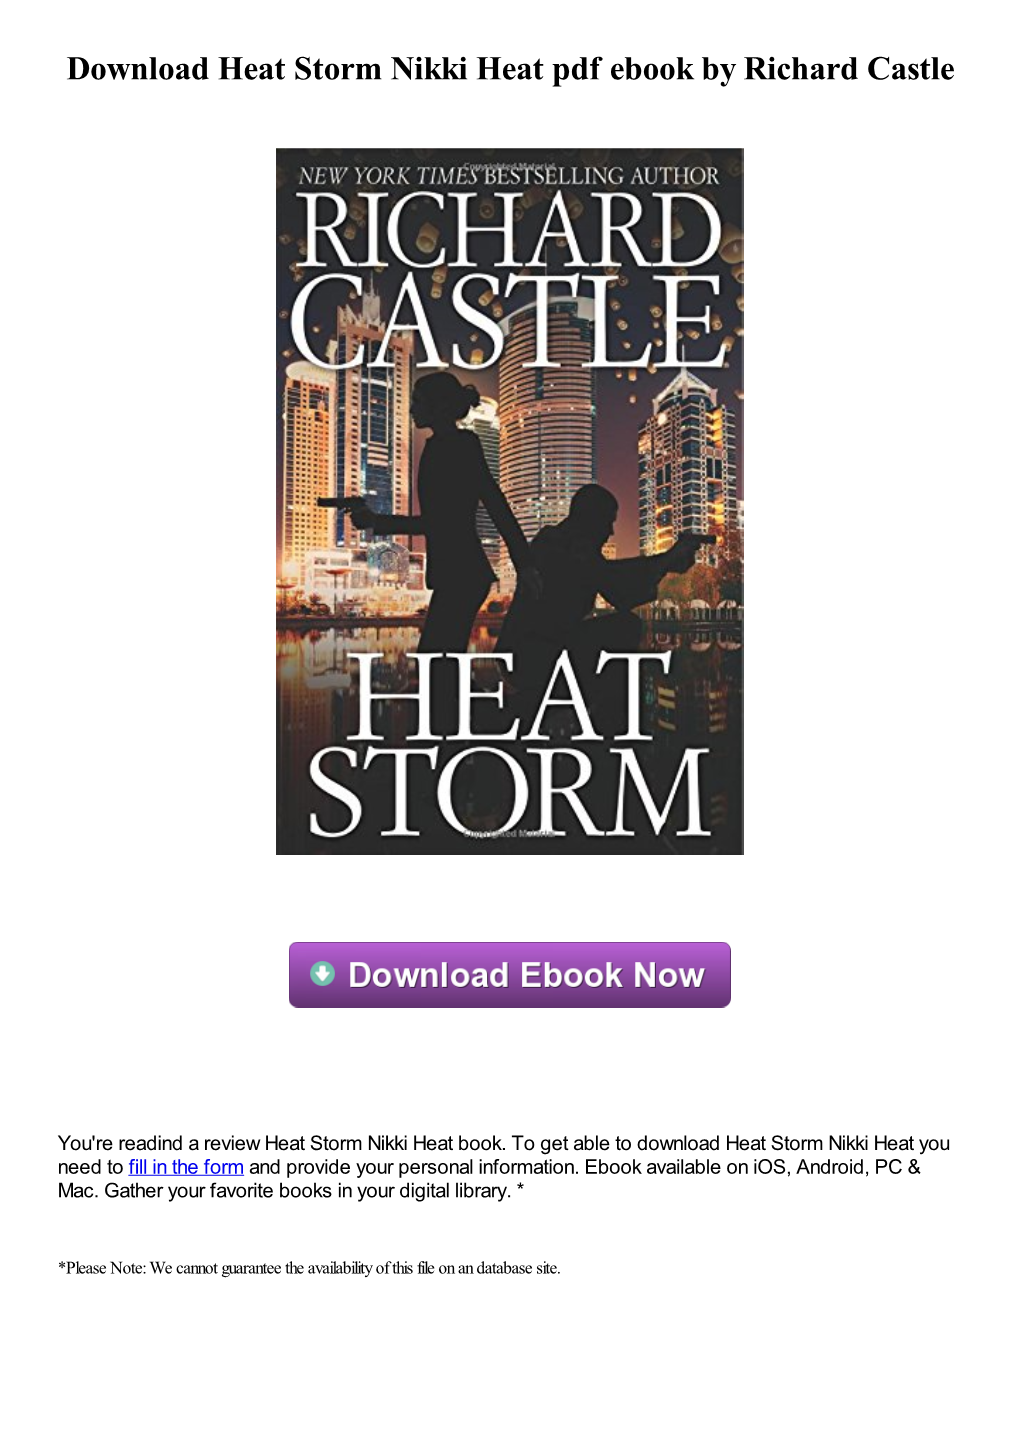 Download Heat Storm Nikki Heat Pdf Ebook by Richard Castle